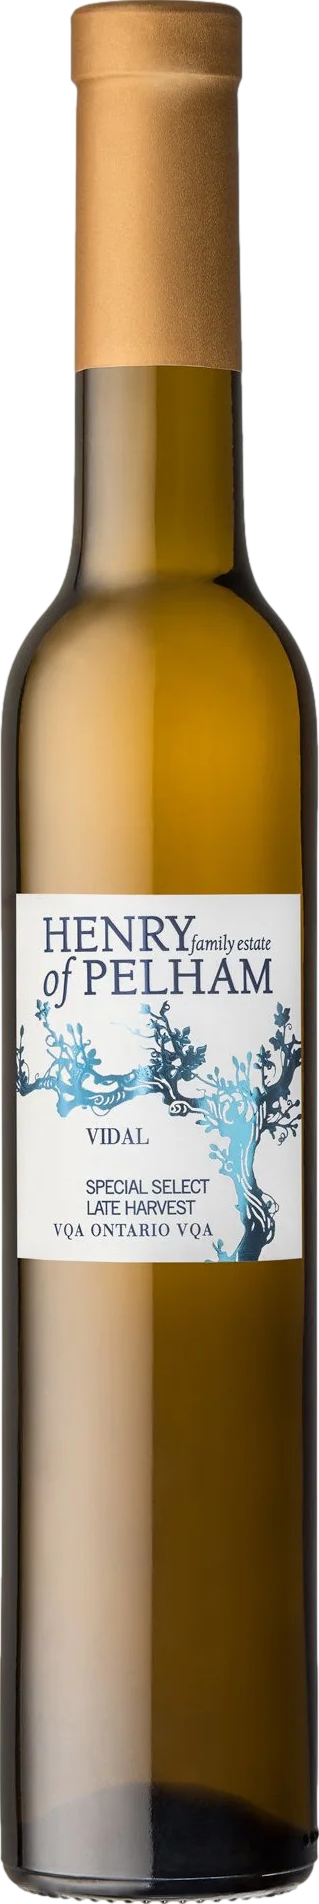 Henry of Pelham Special Select Late Harvest Vidal 2019 Bílé 10.0% 0.375 l